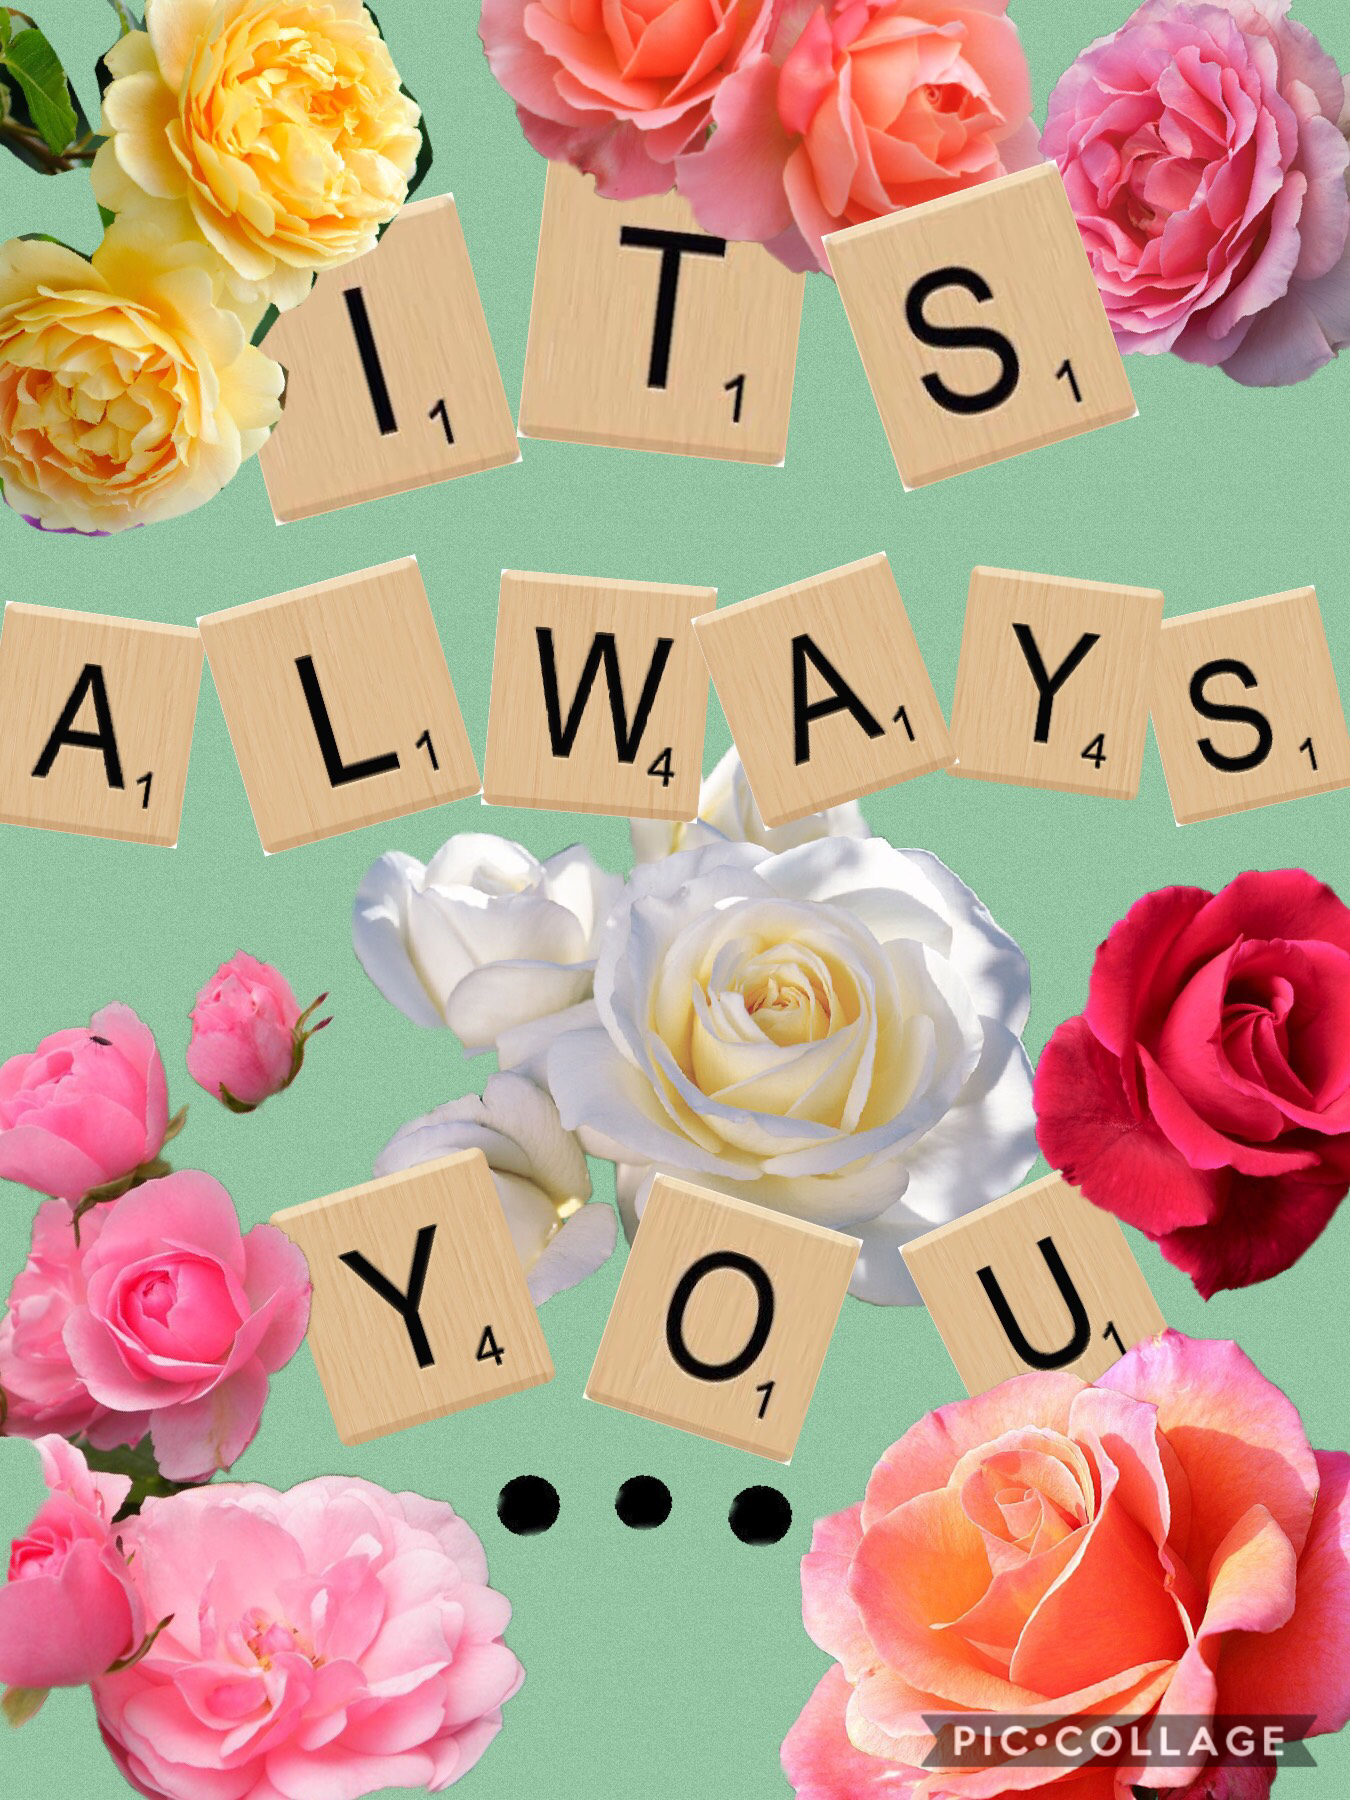 It always you...💋